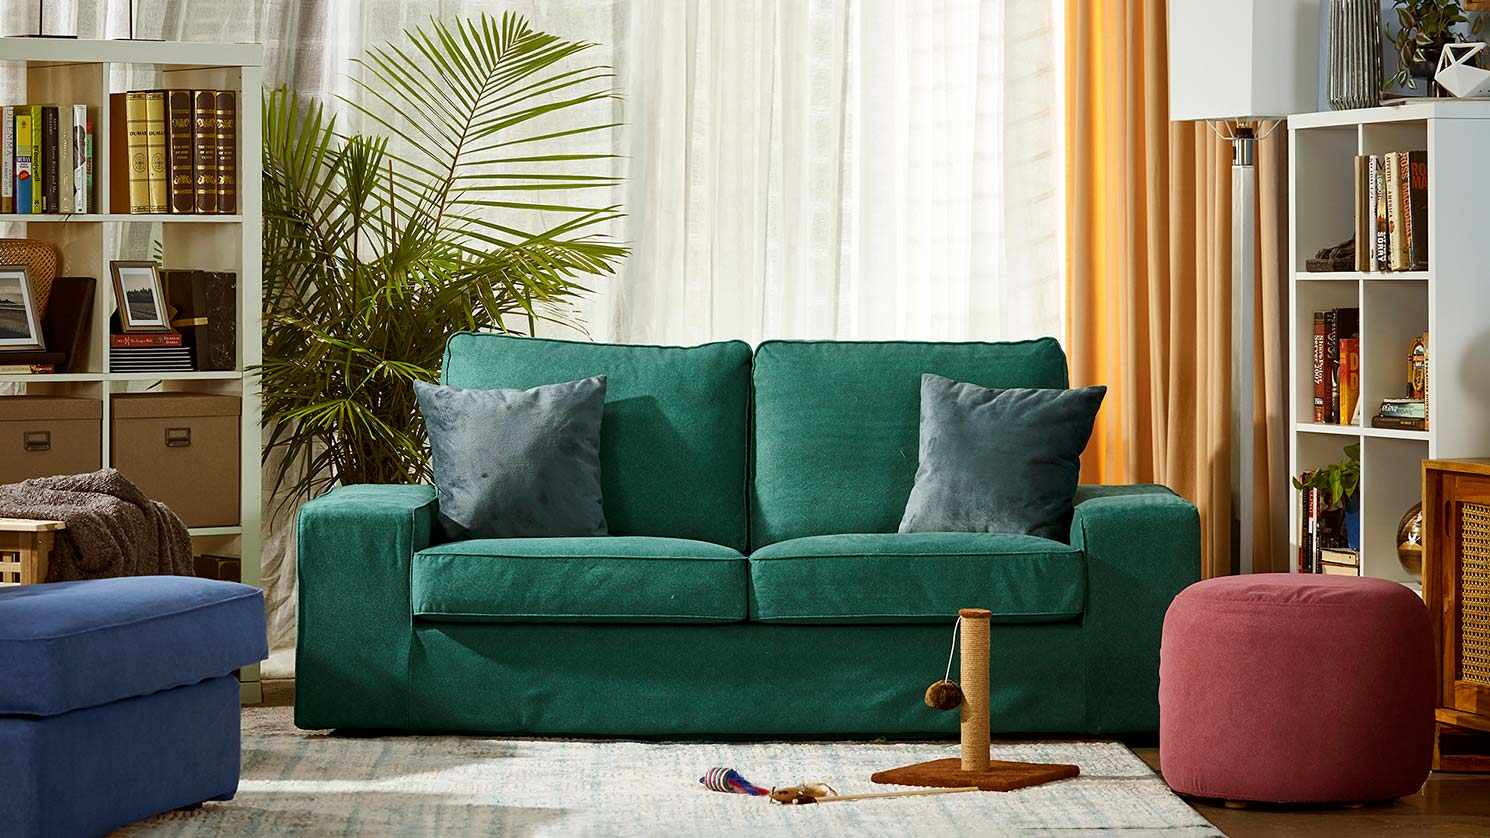 How To Change KIVIK Sofa Cover